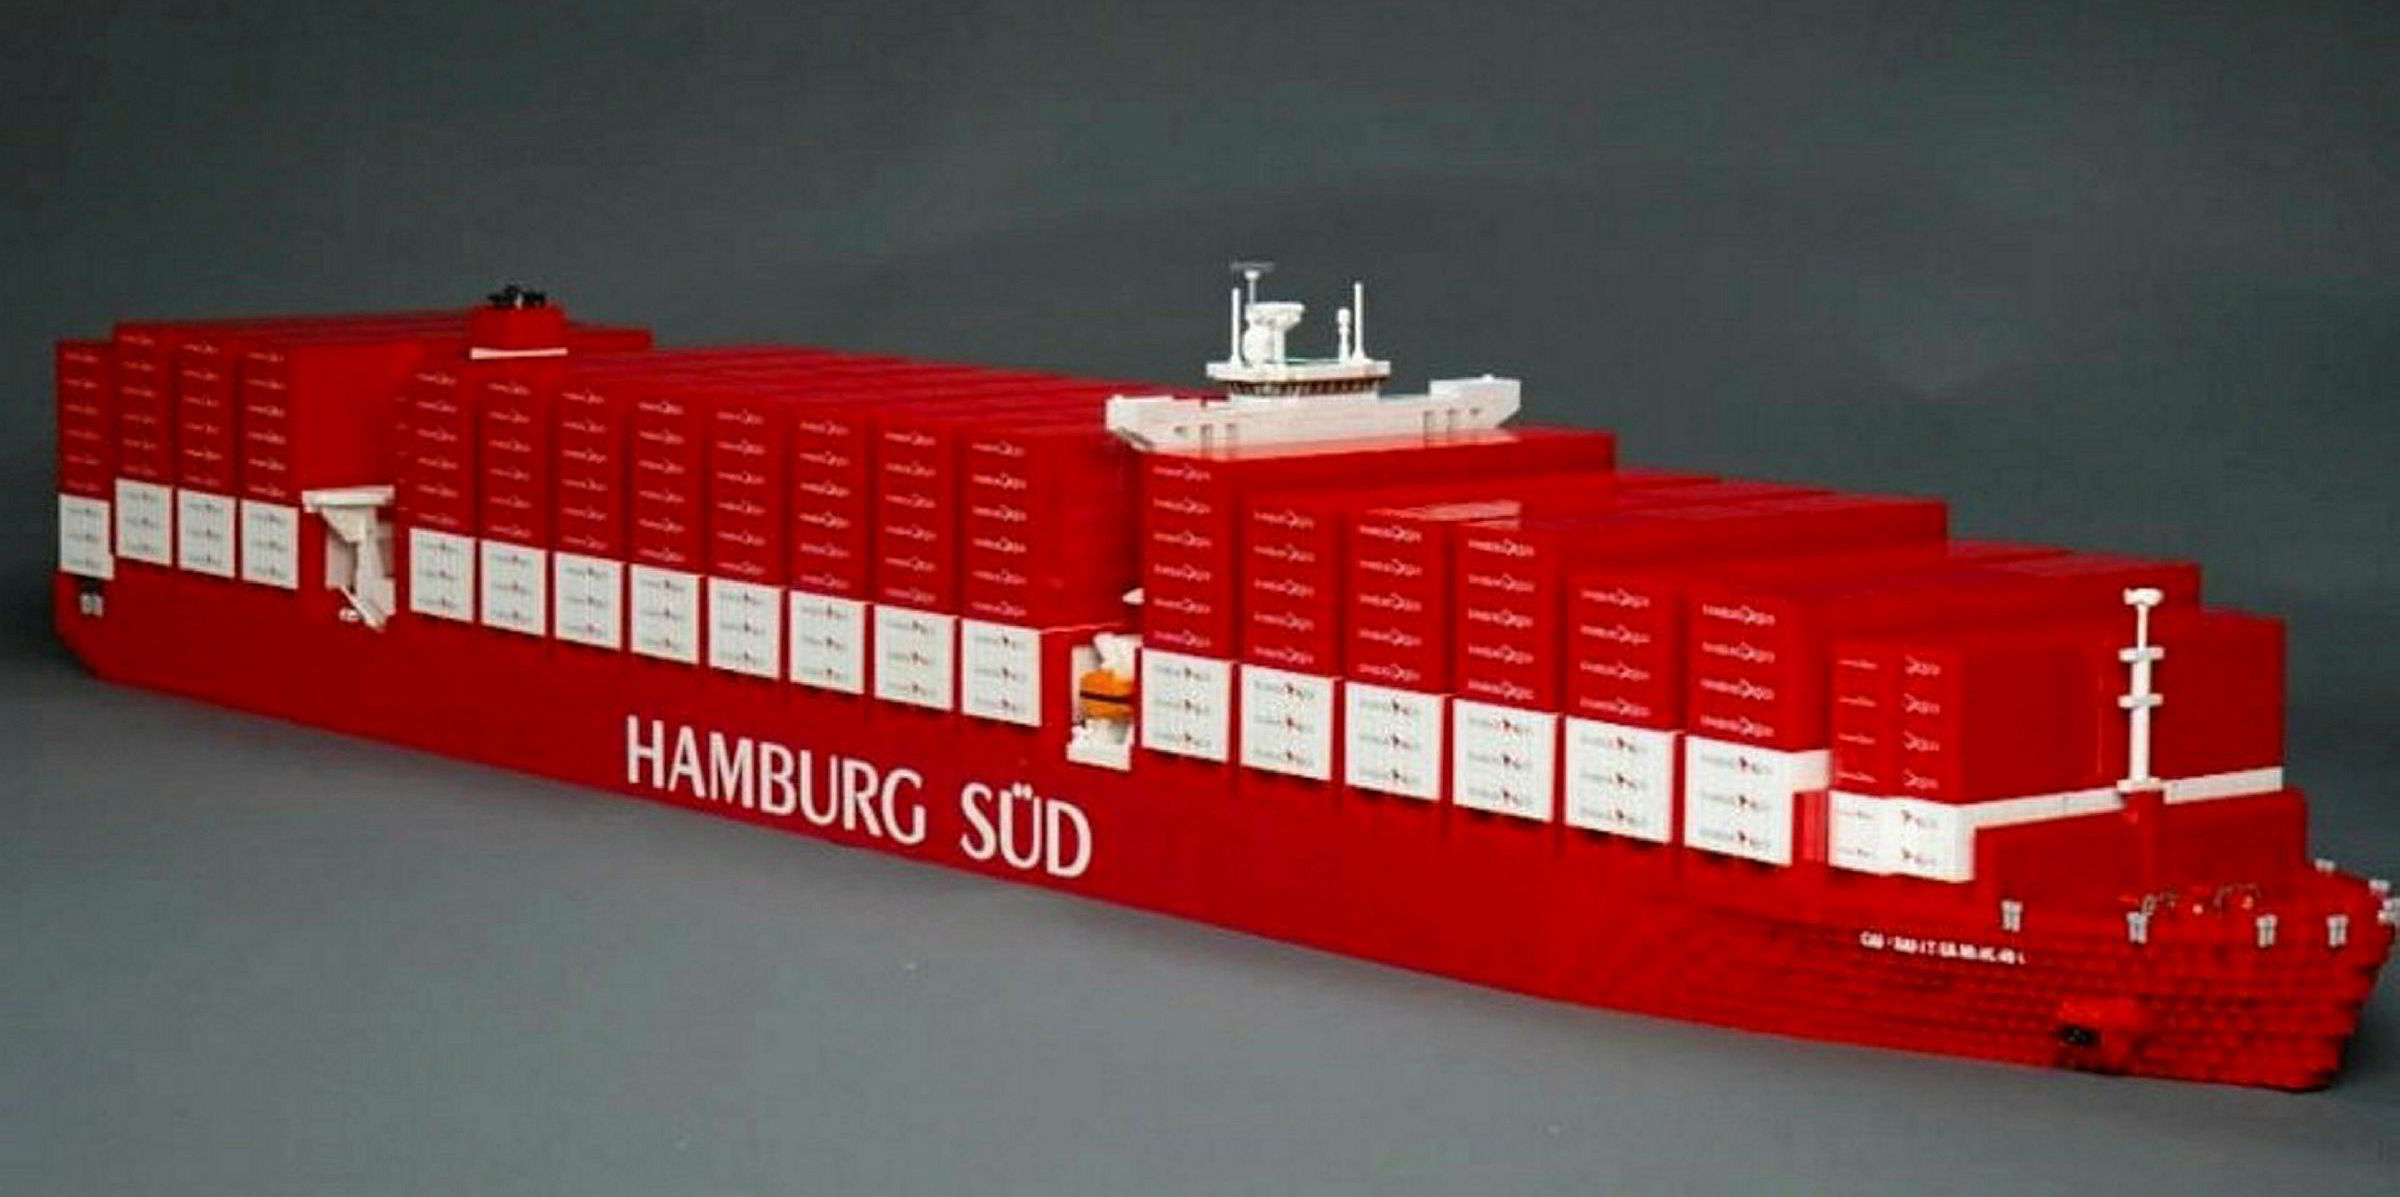 Maersk says 'happy birthday' to Hamburg Sud with Lego gift | TradeWinds